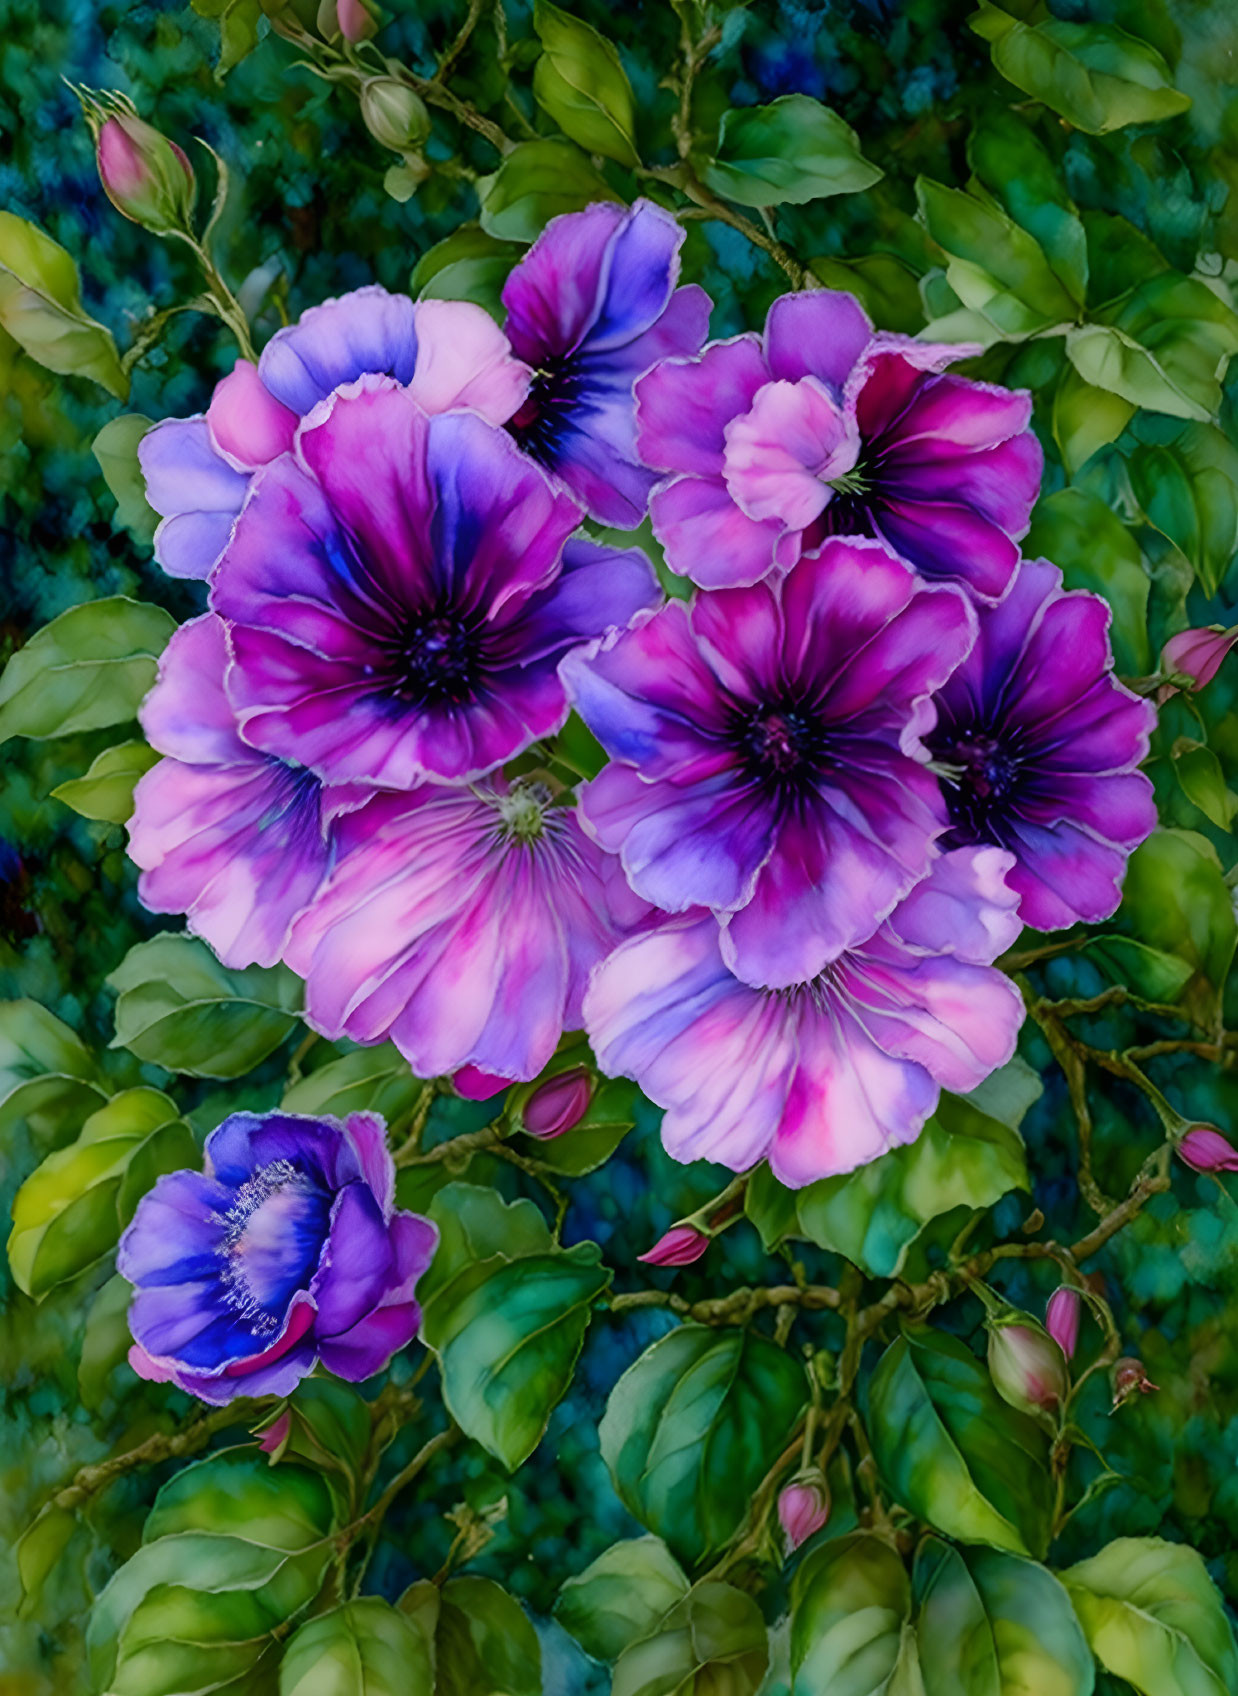 Violet hued blooms